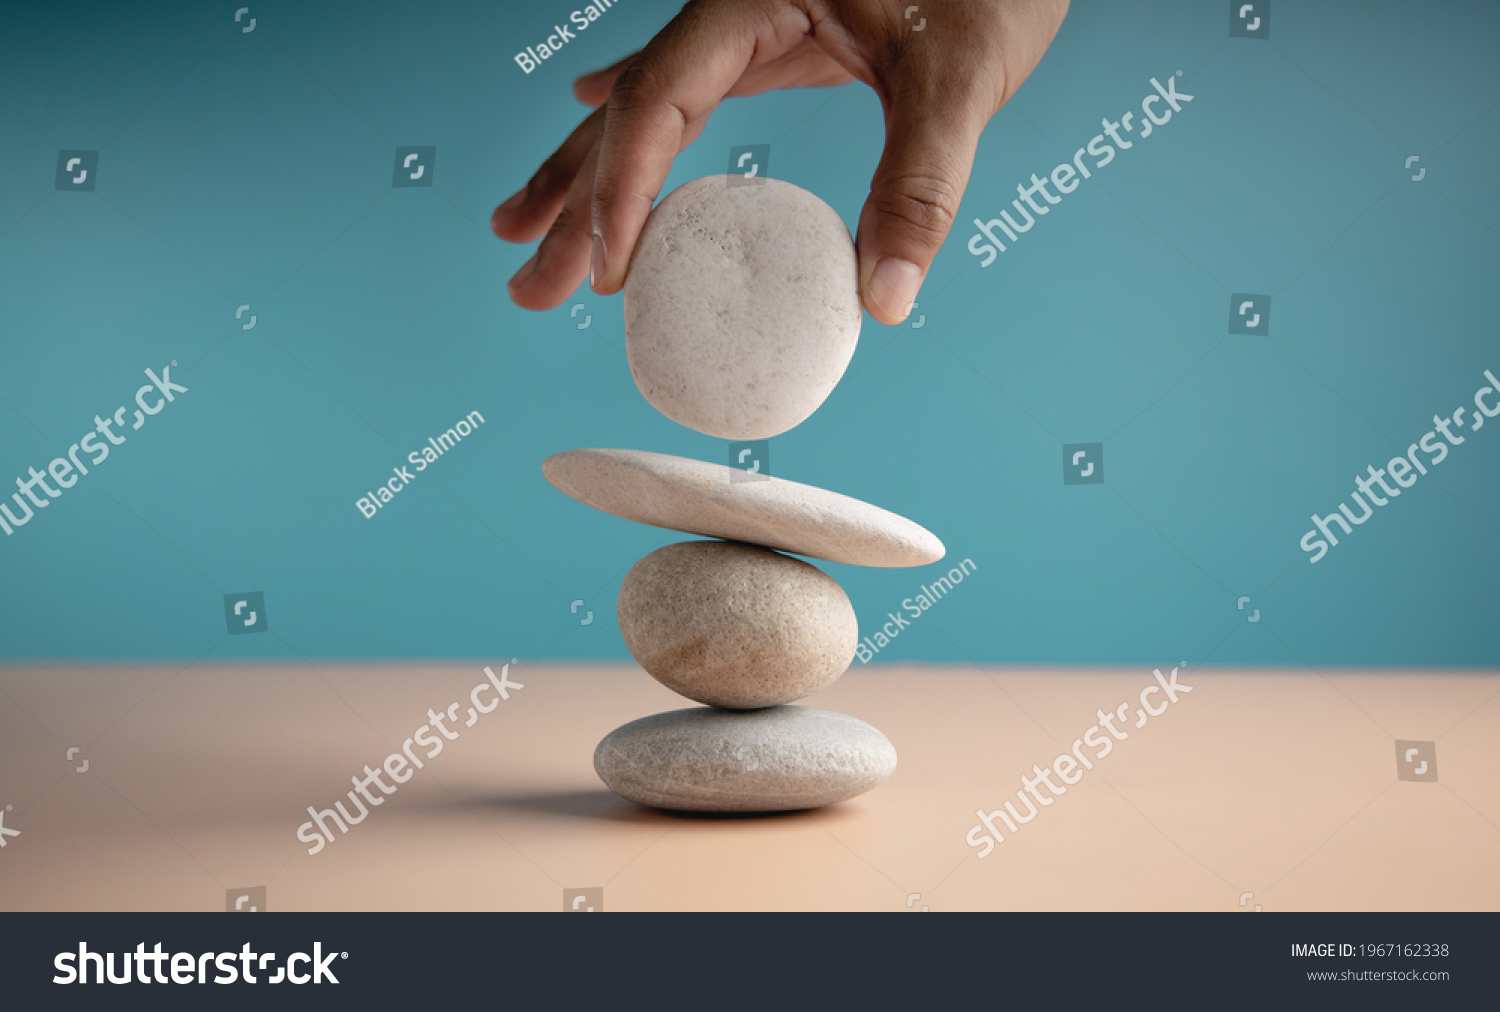 Life Balance Concept. Hand Setting White Natural Zen Stone Stack. Balancing Mind, Soul and Spirit. Mental Meditation Practice #1967162338